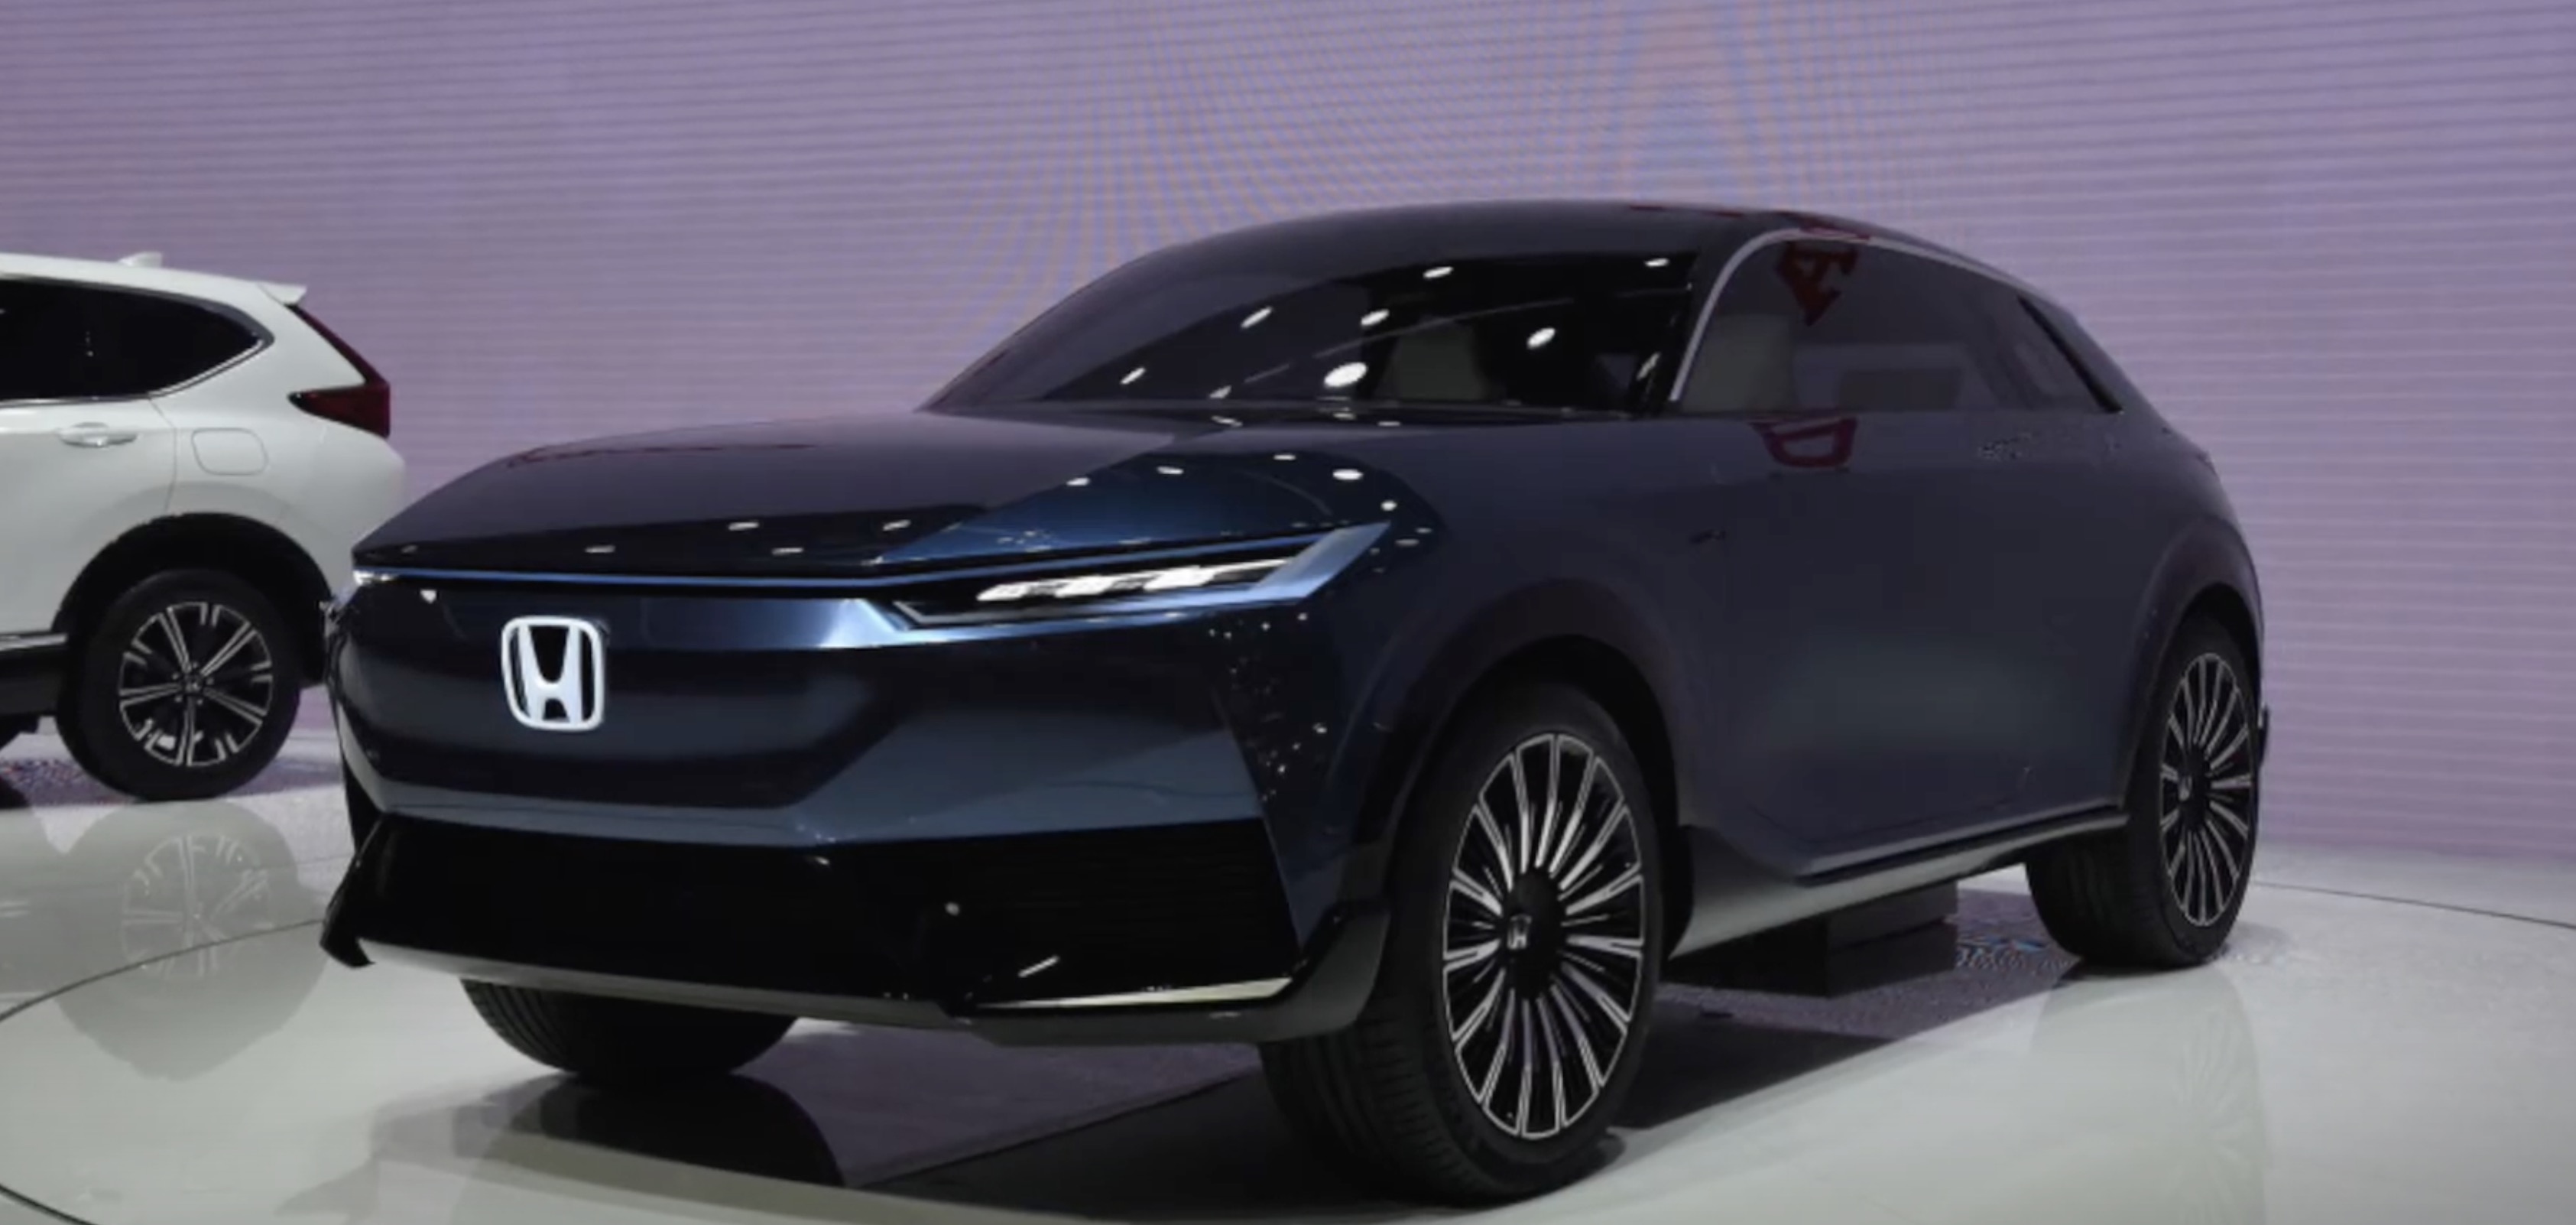 Honda Unveils Sleek New Electric Suv Concept Showing Future Mass Production Model Trend Electrek